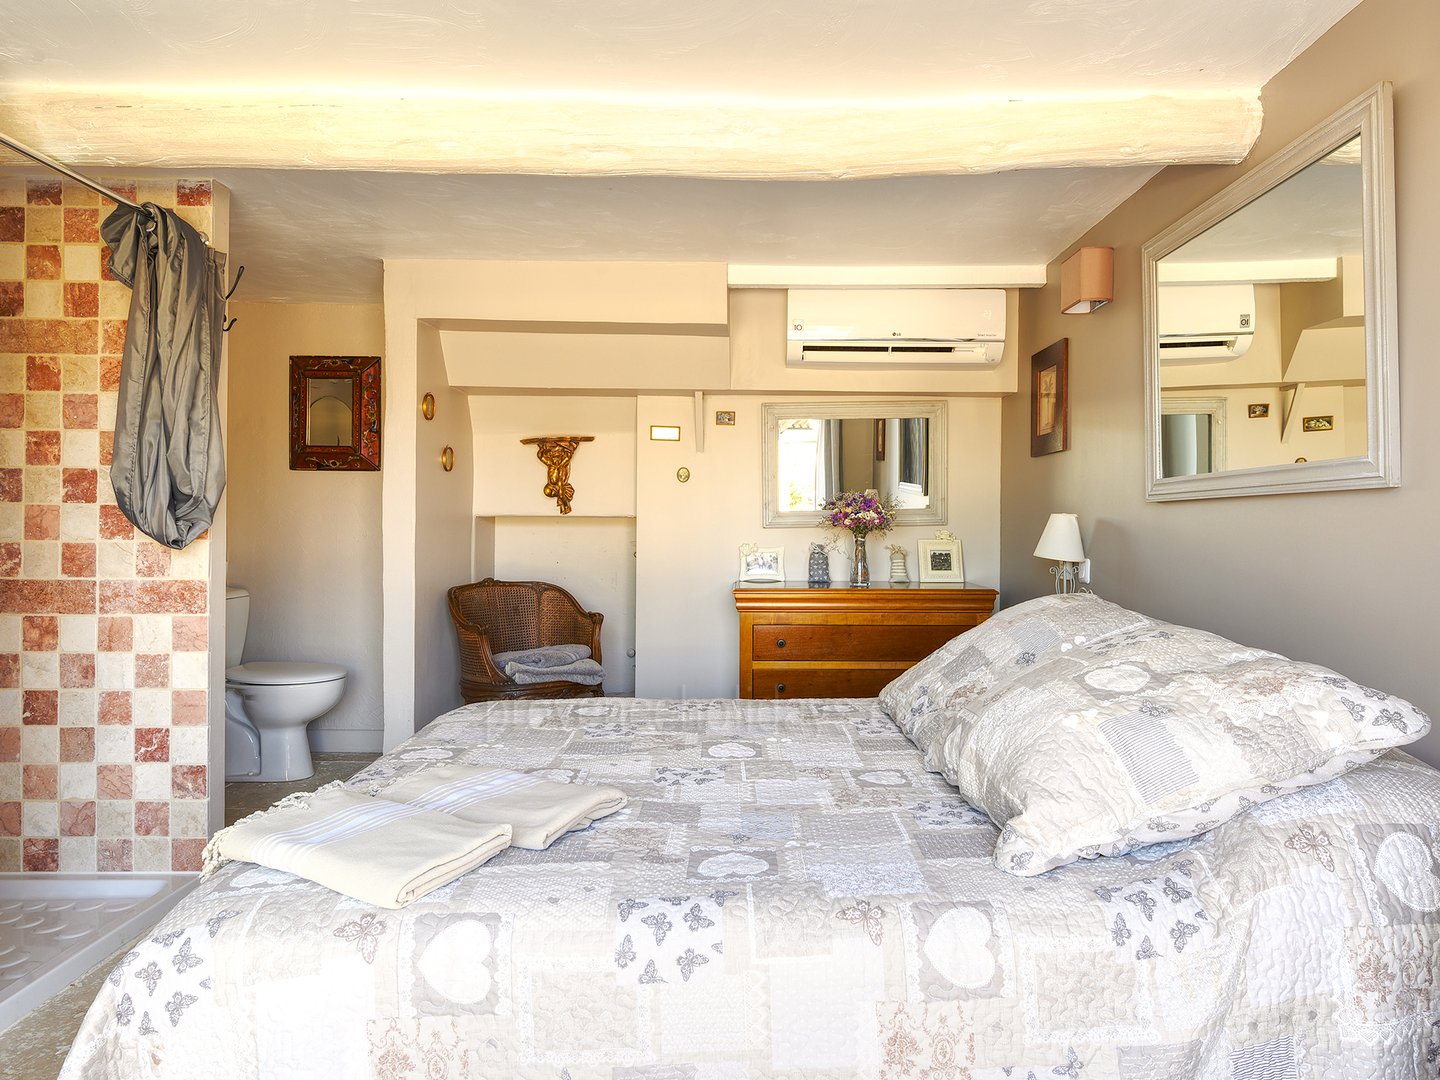 59 - Le Mas des Olives: Villa: Bedroom